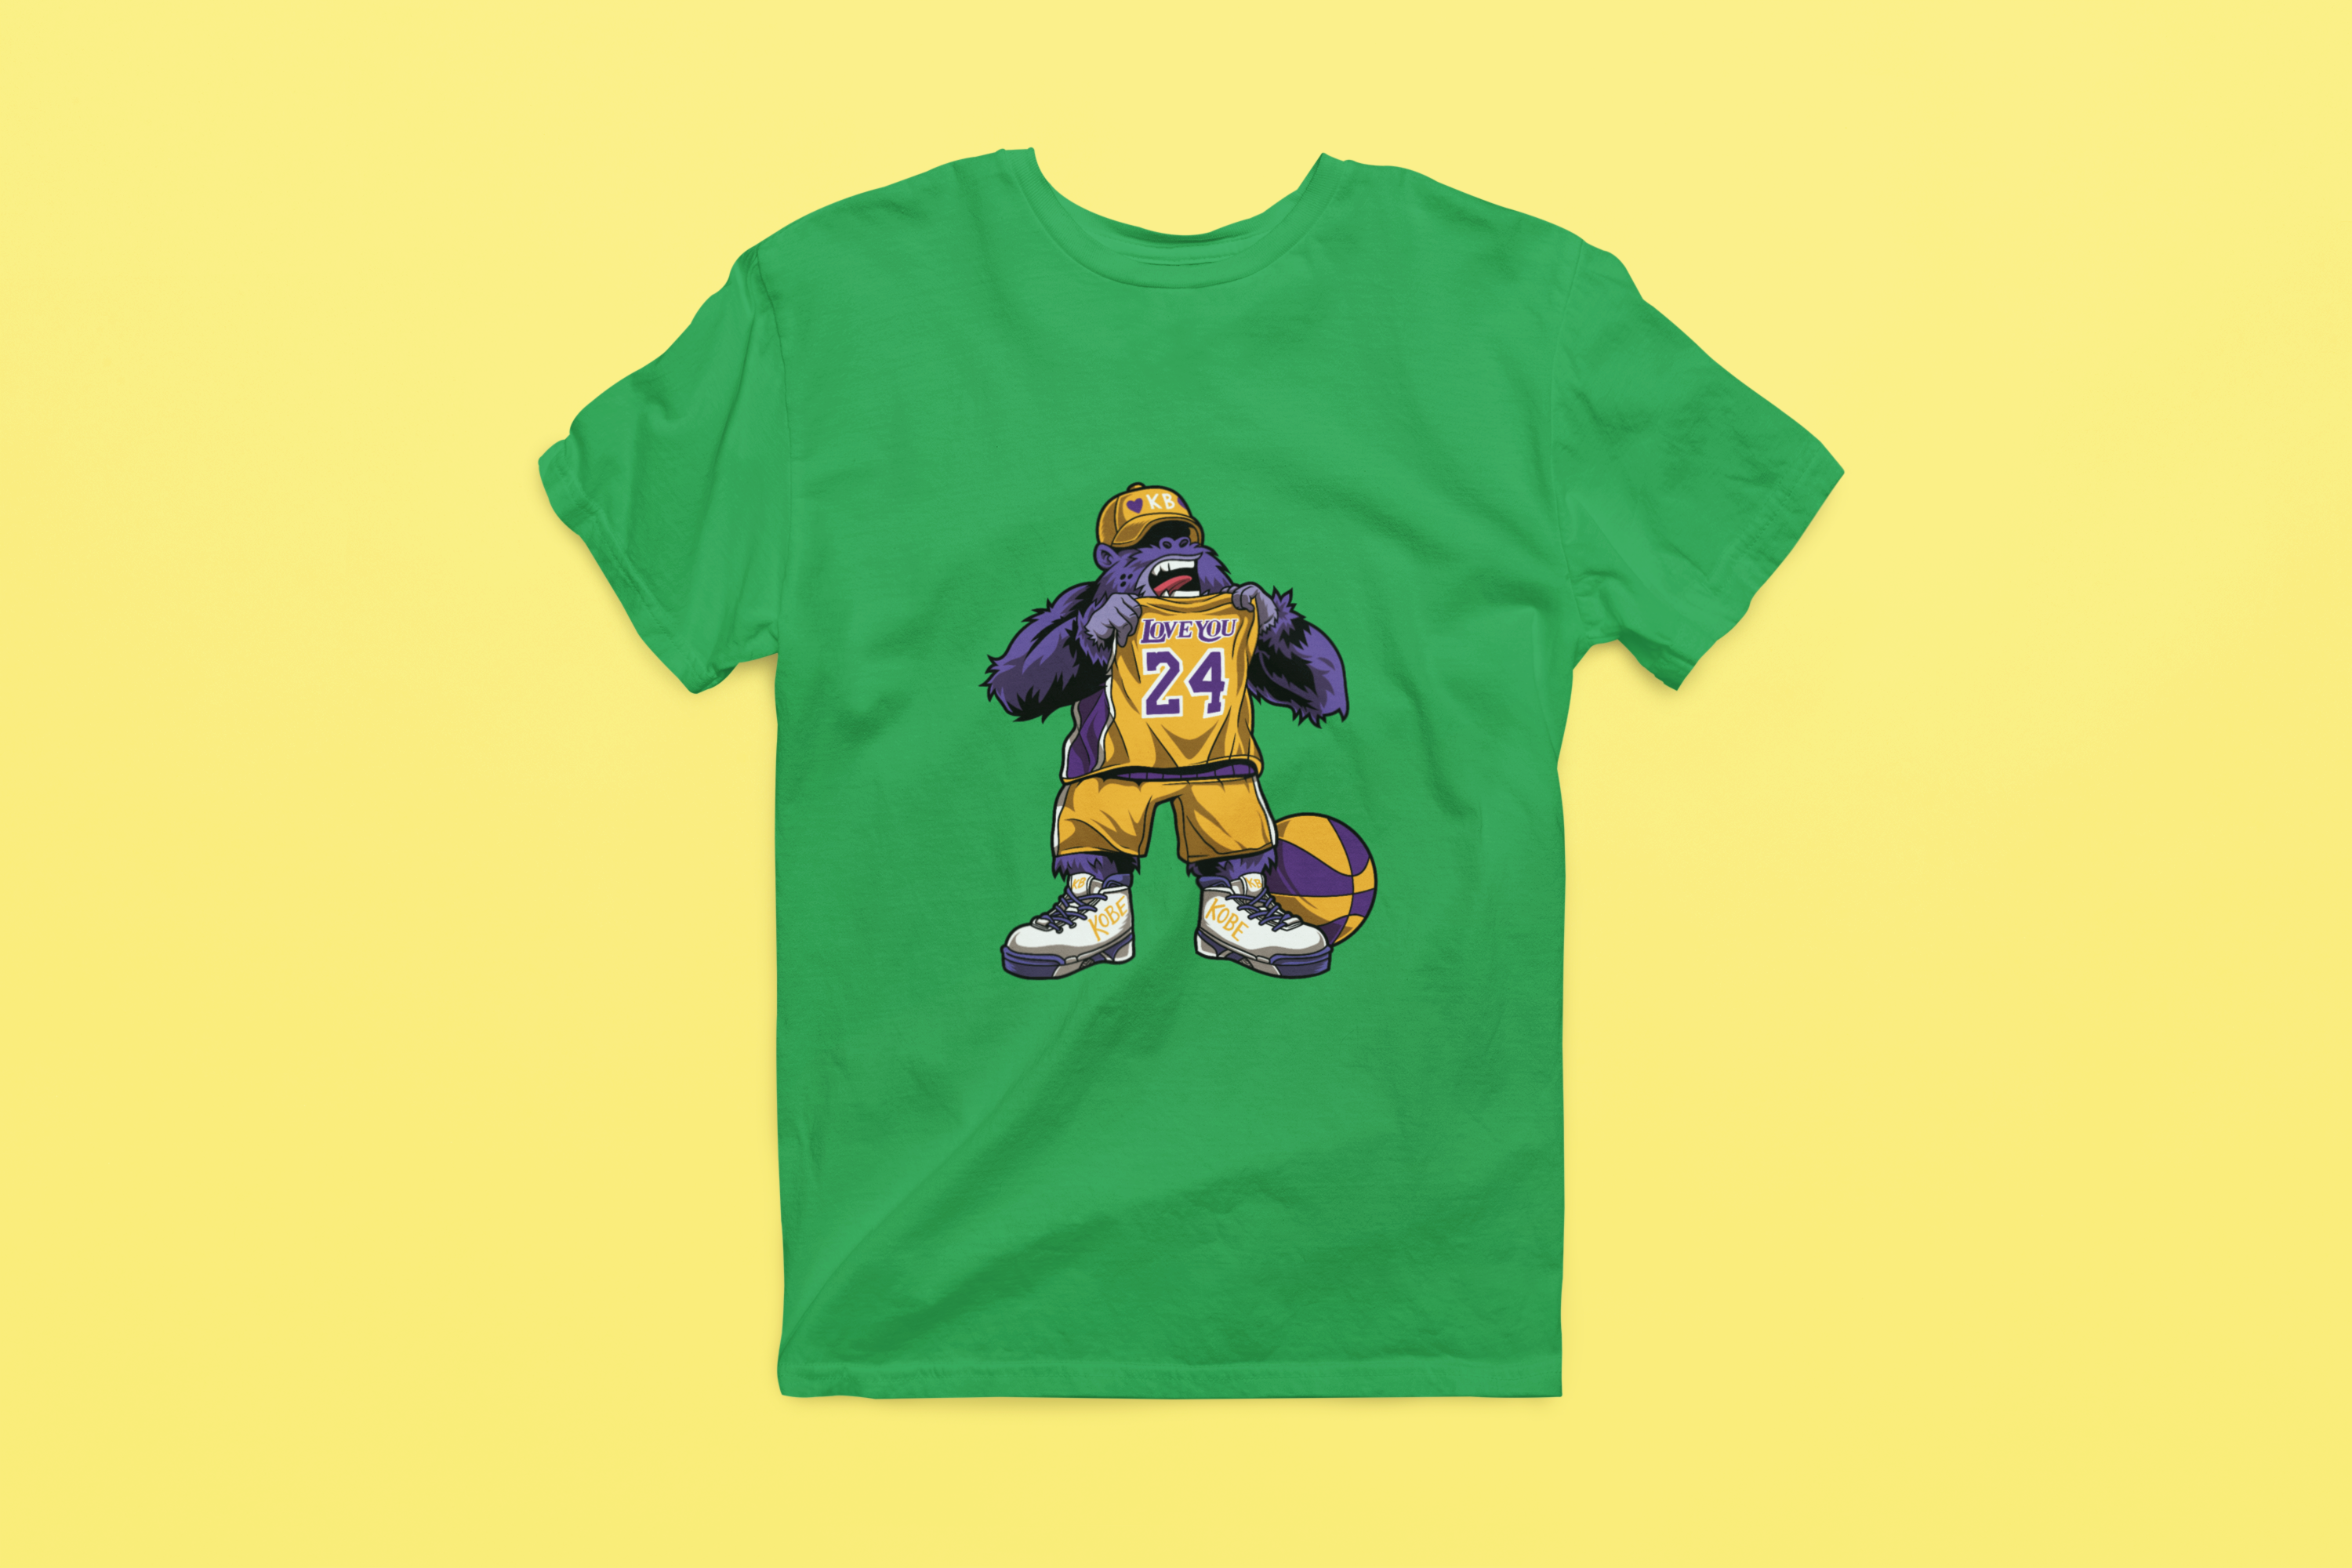 Rainbow Gorilla 'Love you 24' Heren T-shirt